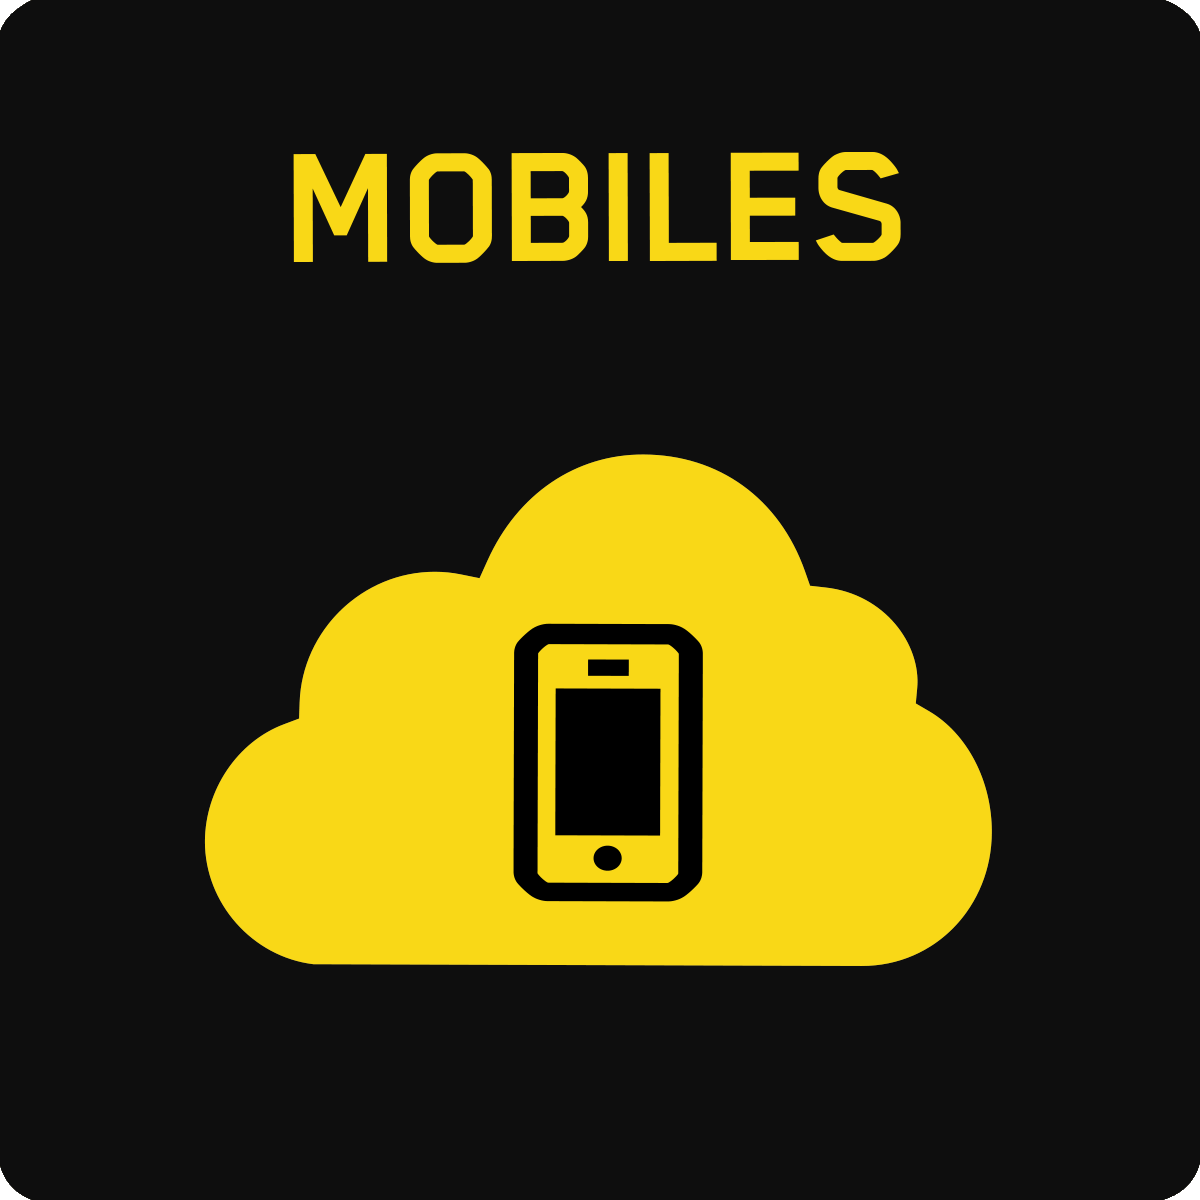 Mobile cloud communications